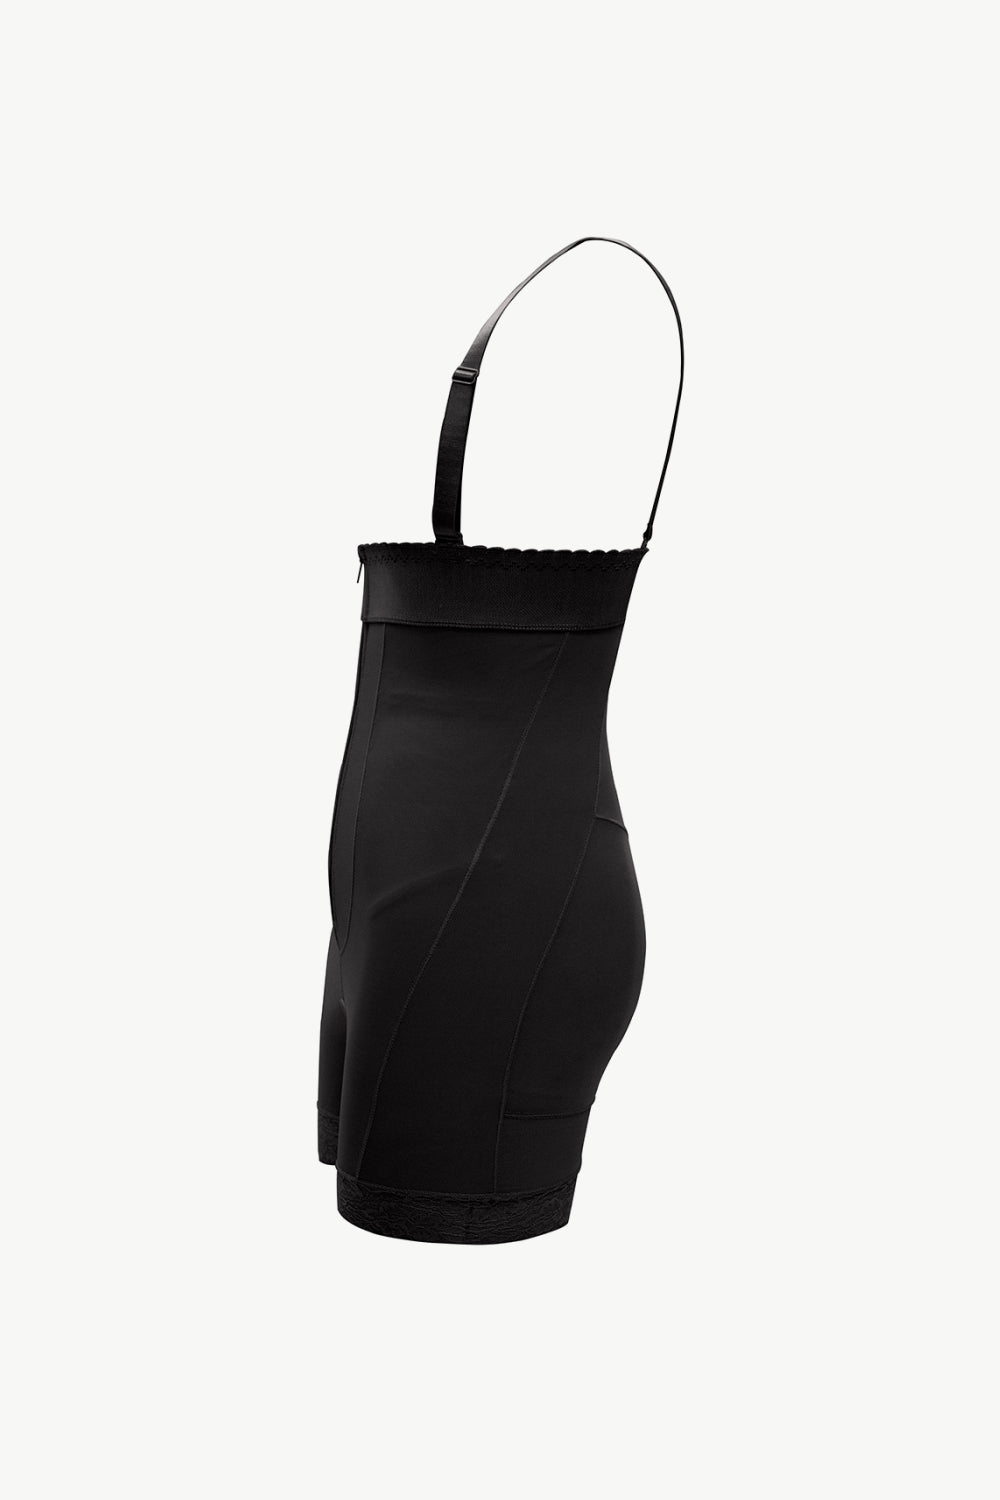 Full Size Zip Up Under-Bust Shaping Bodysuit - DromedarShop.com Online Boutique